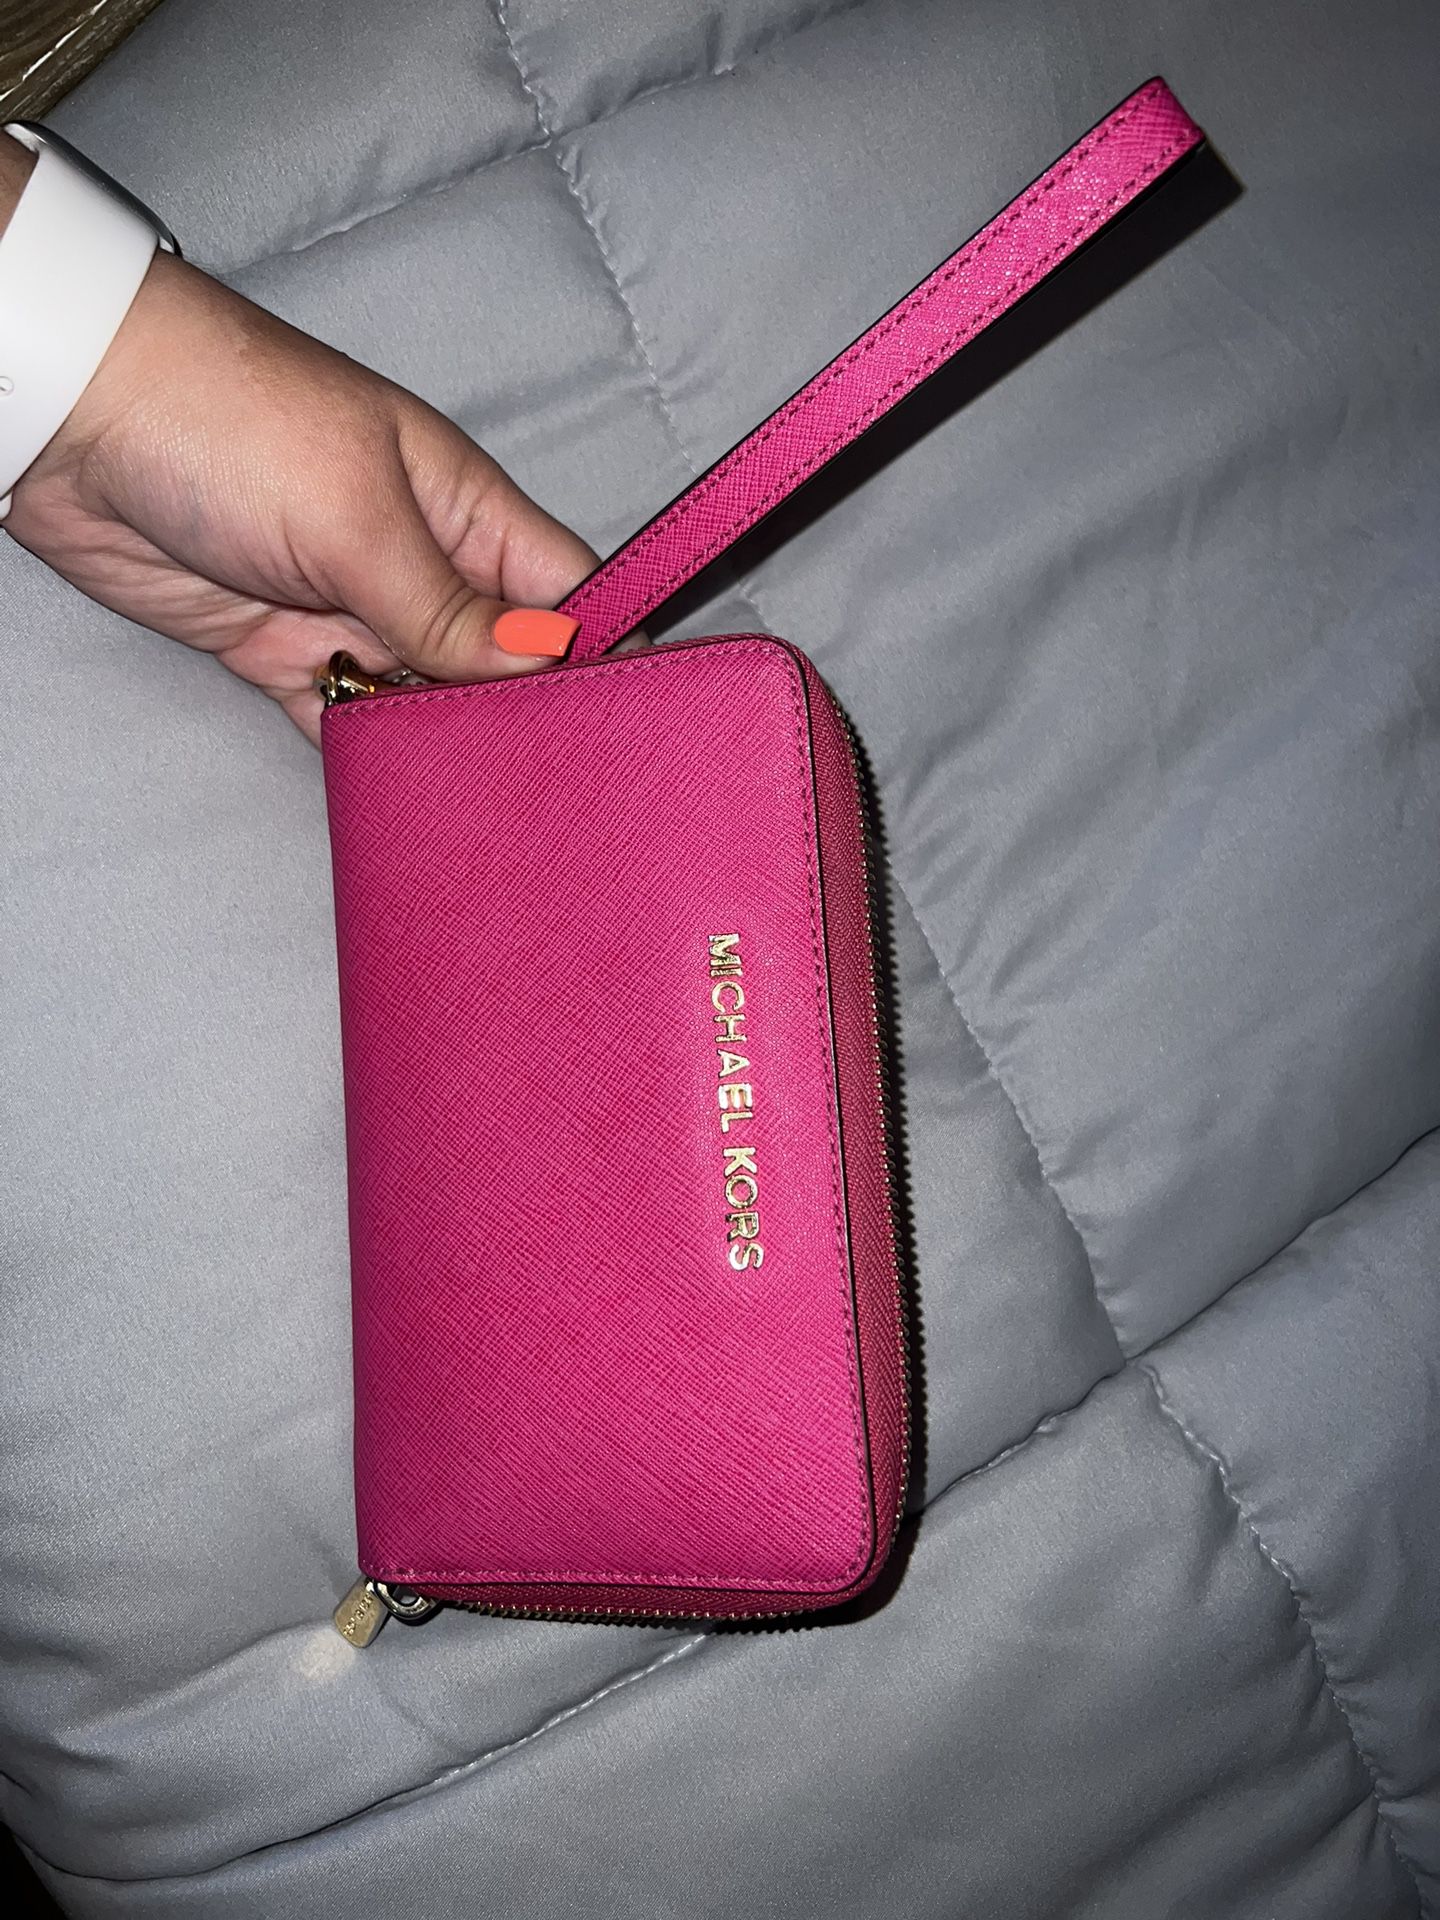 Hot Pink Michael Kors Clutch wallet 